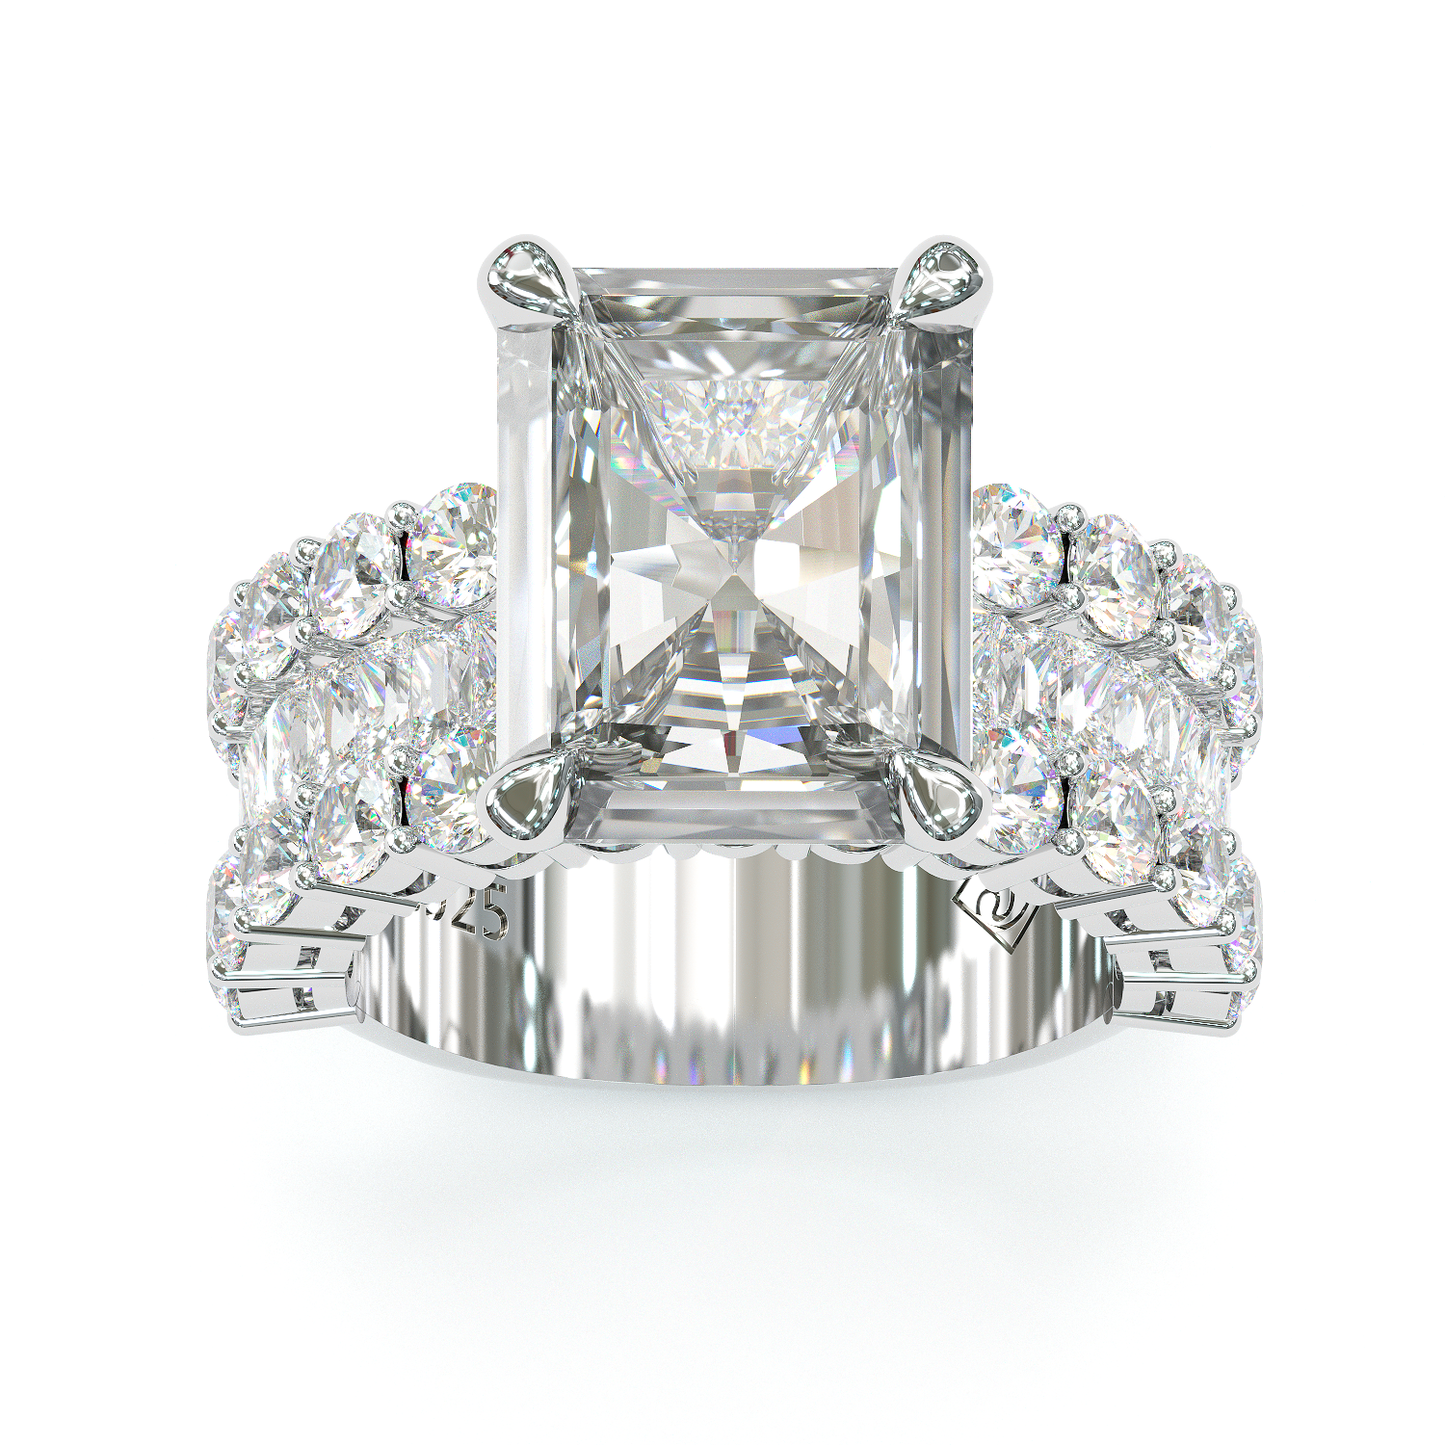 Jzora handmade radiant cut vintage sterling silver engagement ring wedding ring